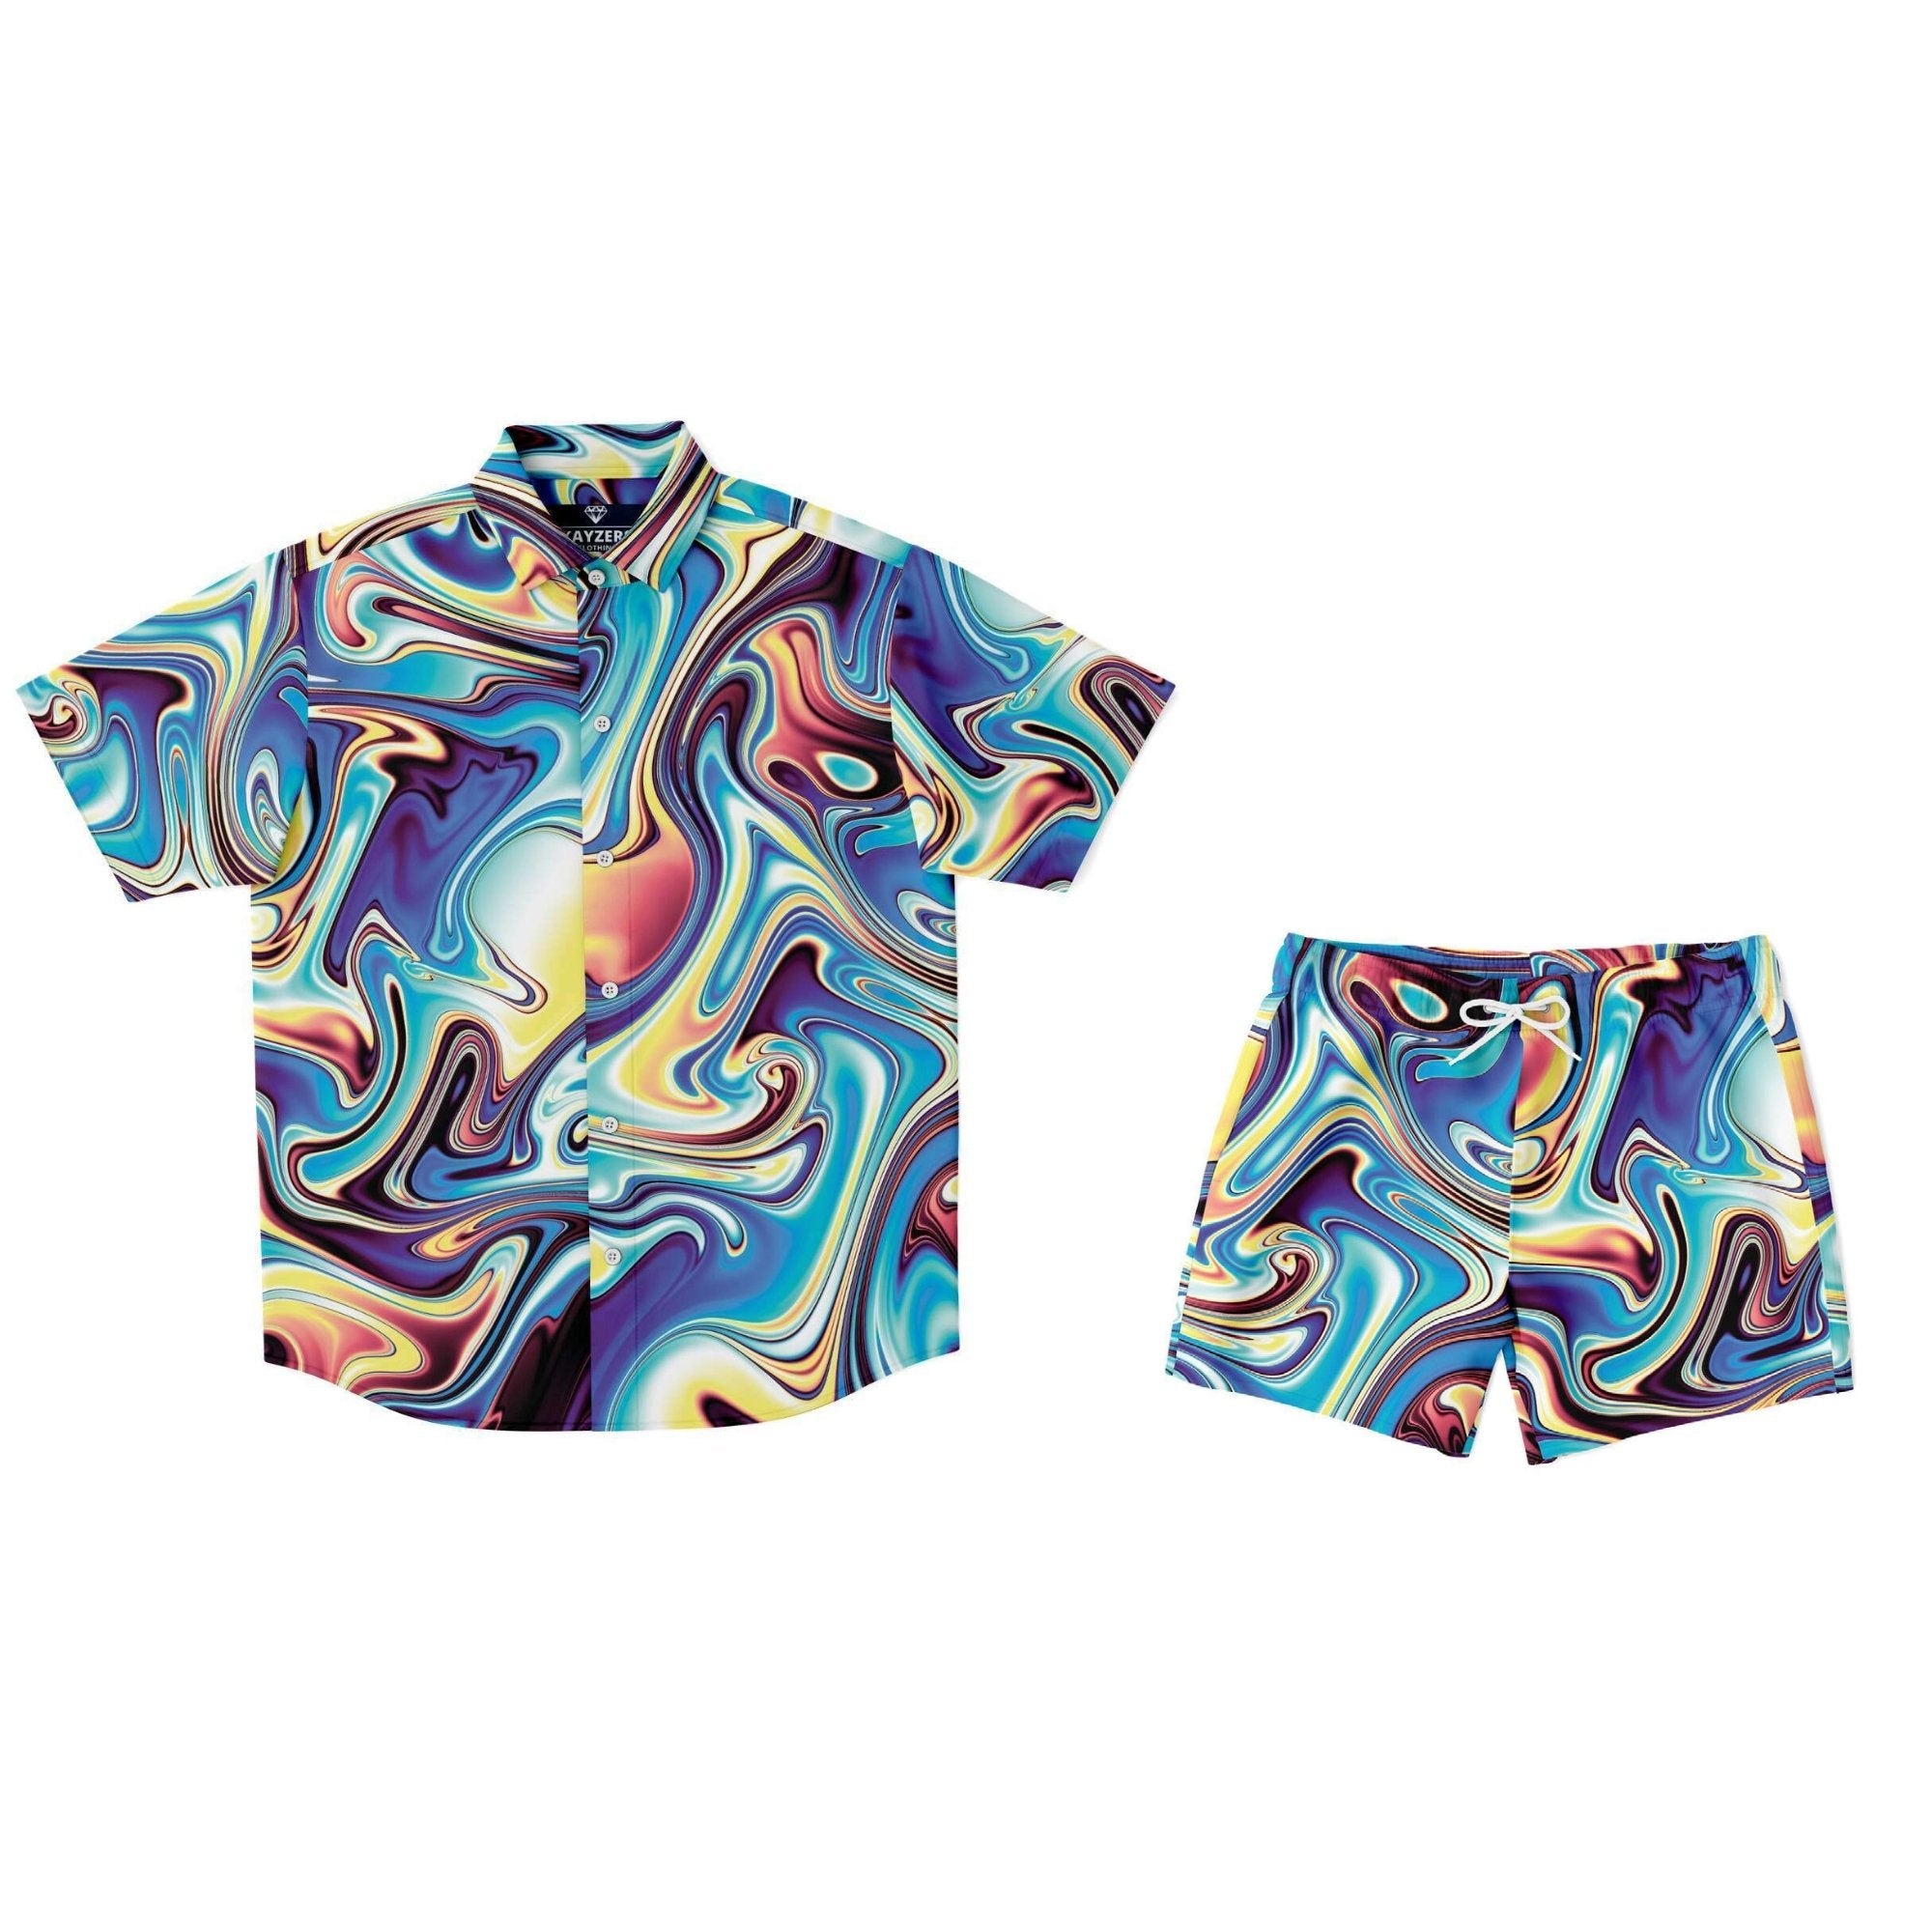 Abstract Liquid Paint Swirls Psychedelic Festival Edm Rave Lsd Dmt Men's Matching Shirt And Shorts Set, Matching Beach Hawaiian Sets - kayzers